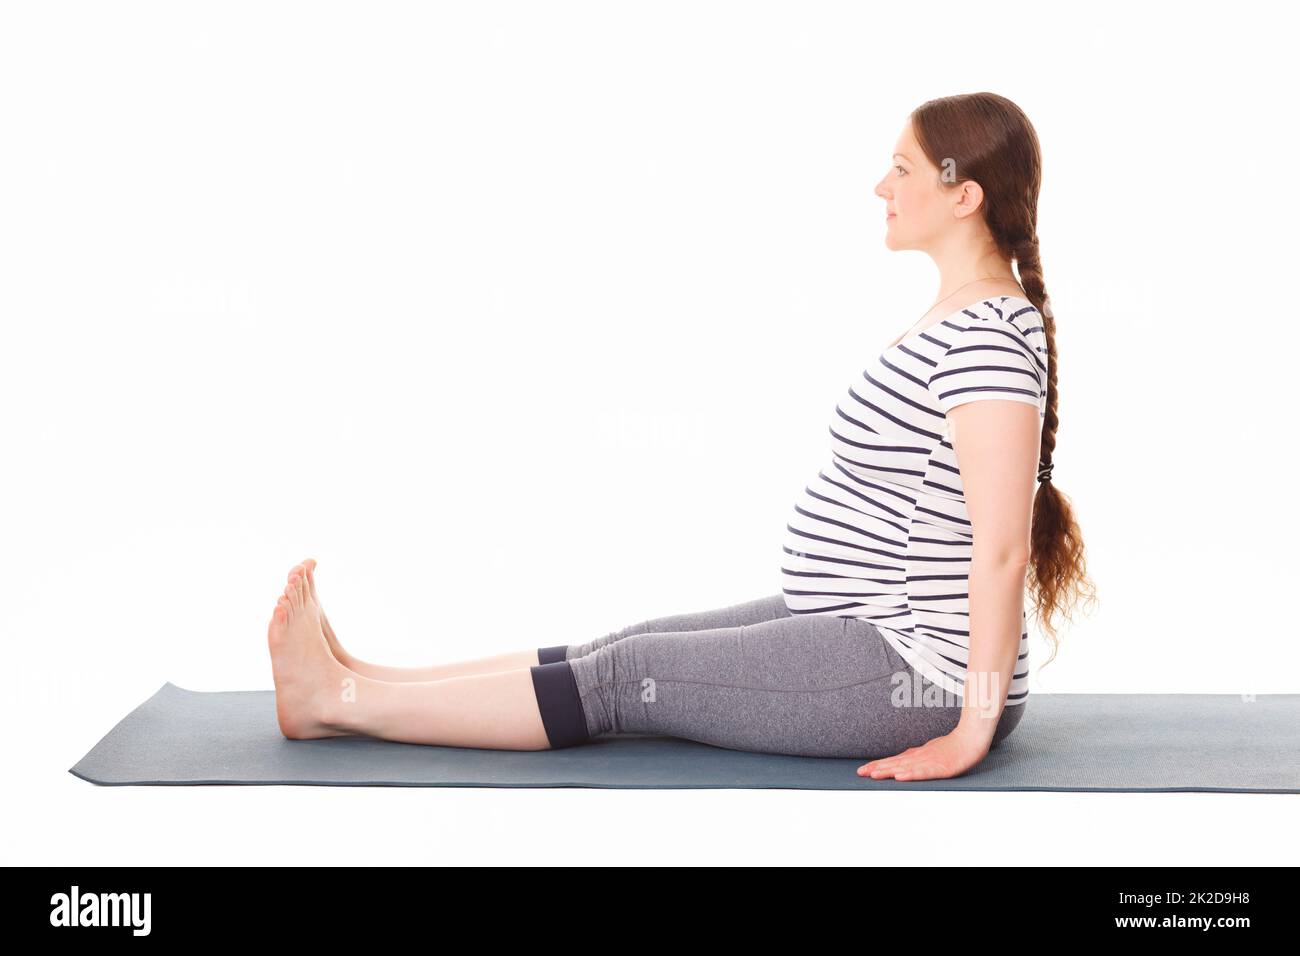 Pregnant woman doing yoga asana Dandasana Stock Photo